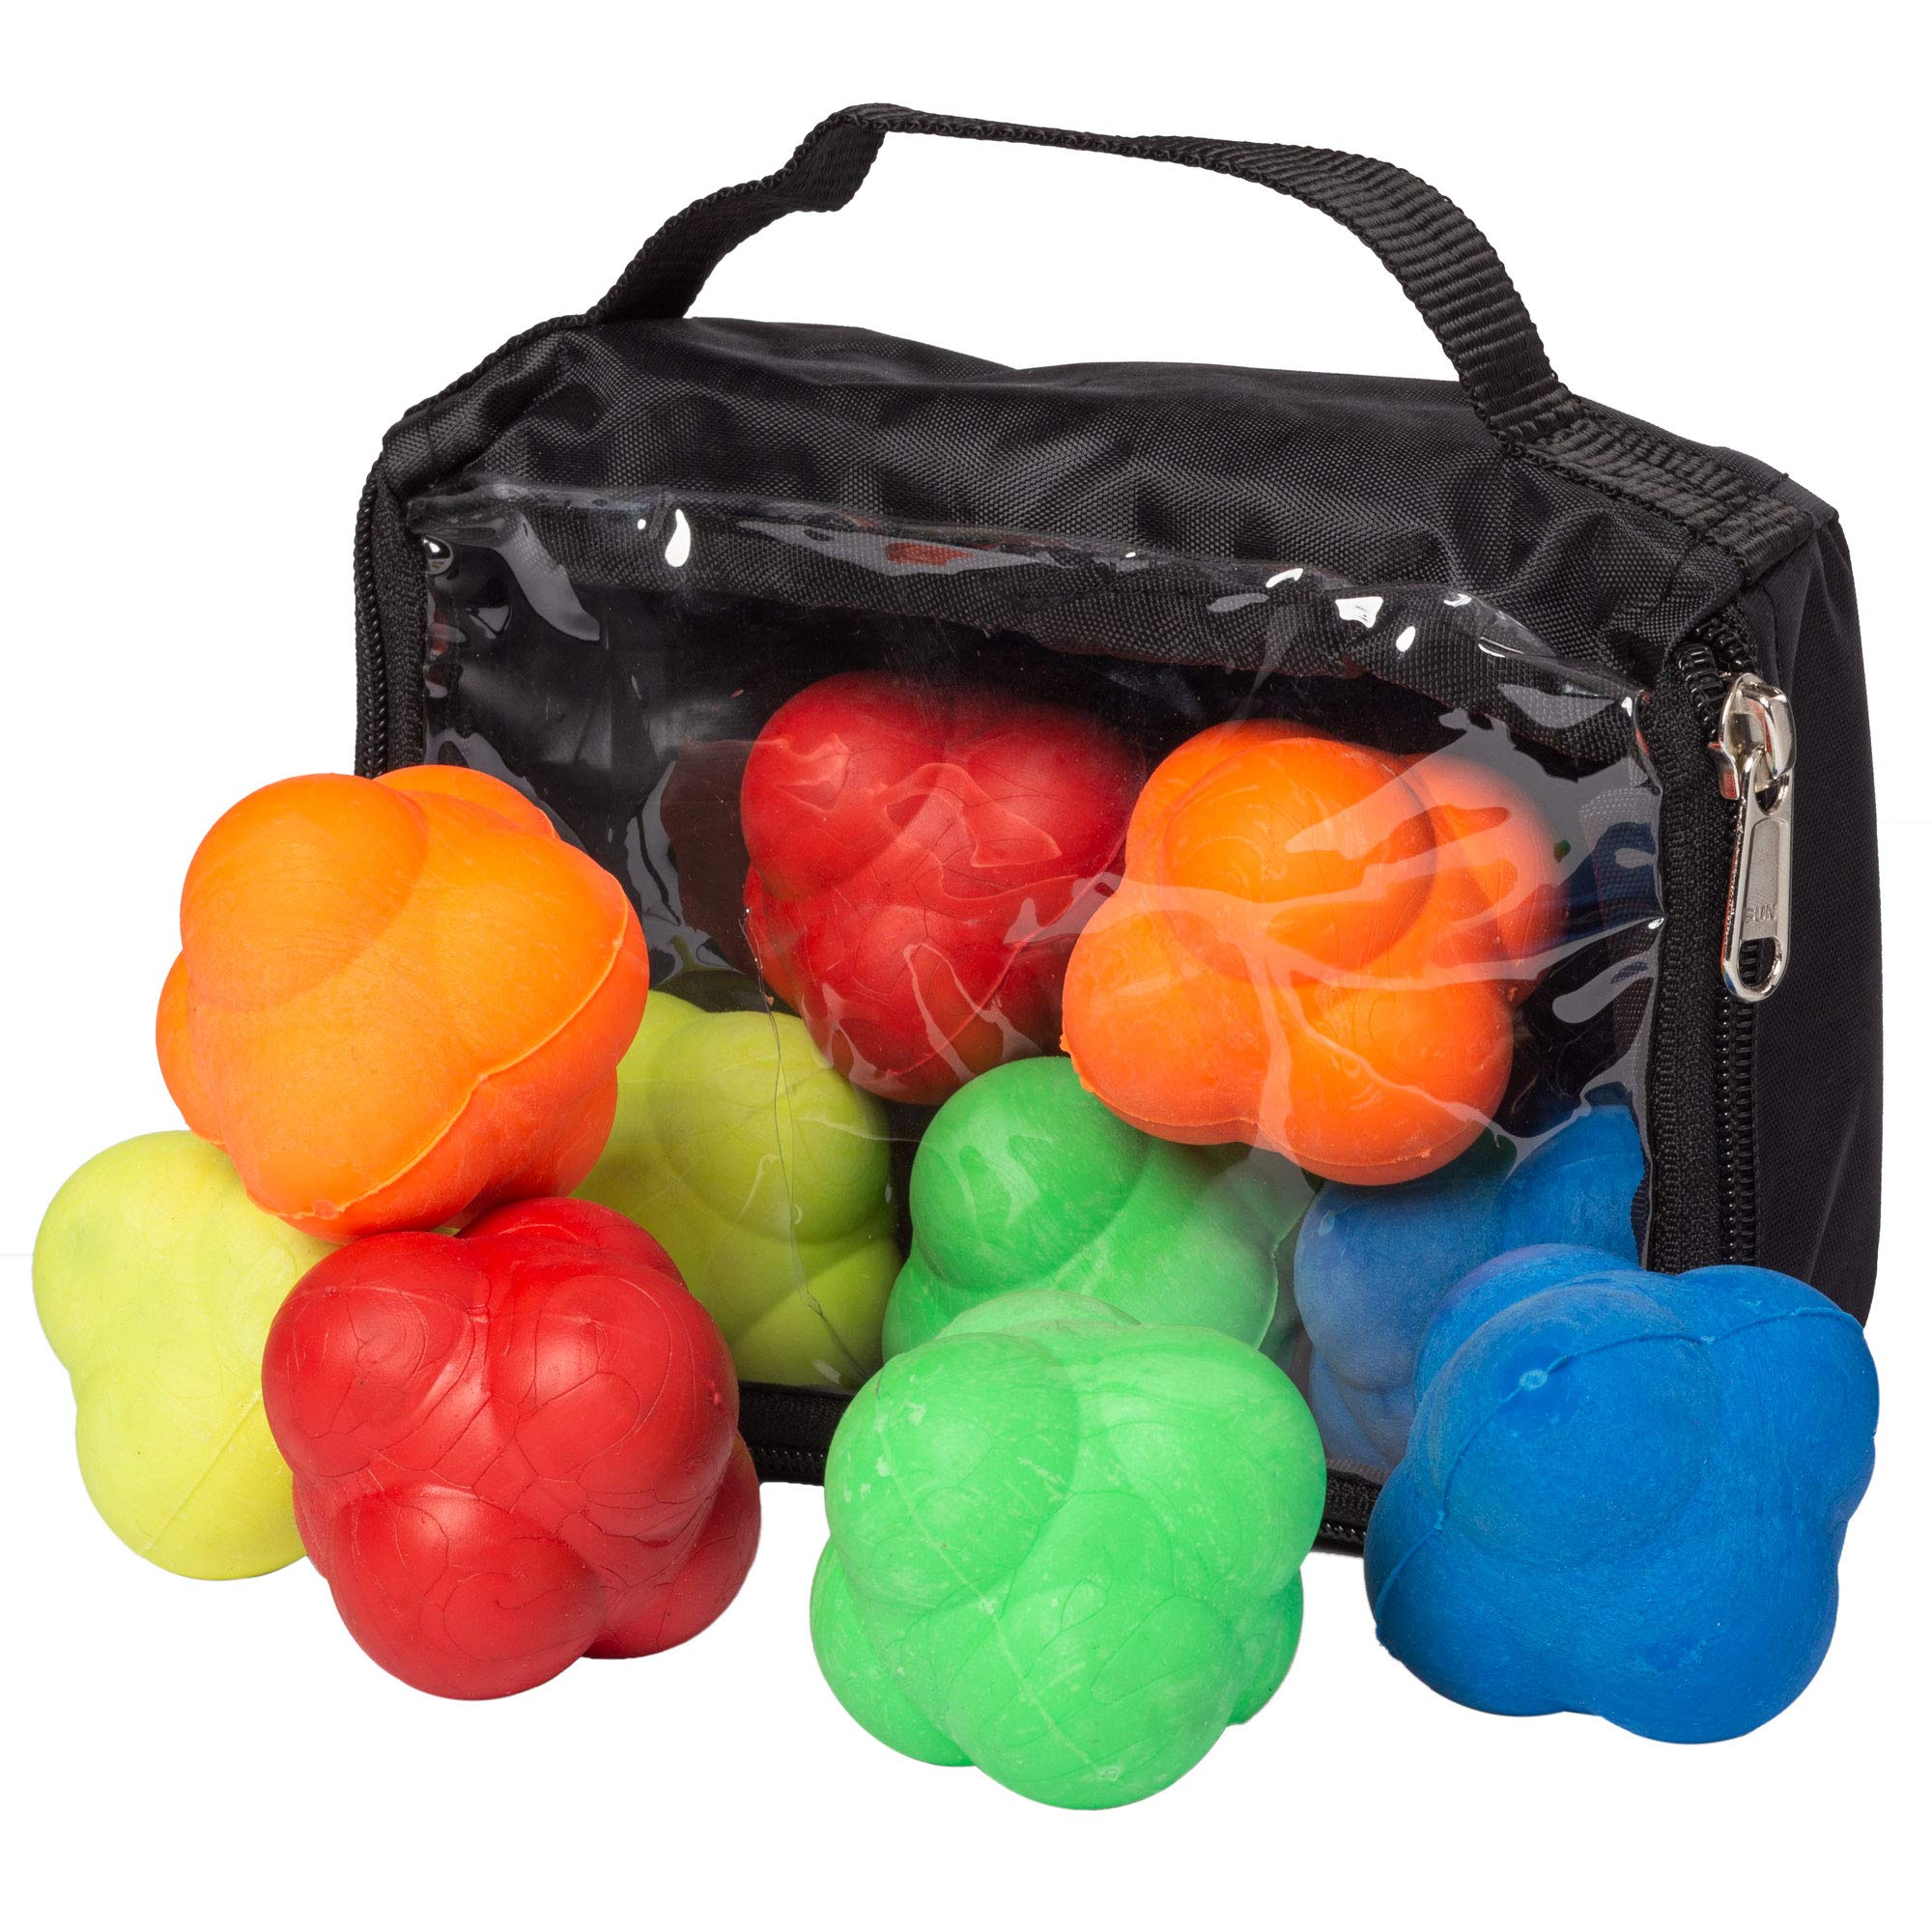 Reaction Balls, 5-Pack - Red, Yellow, Blue, Green, & Orange